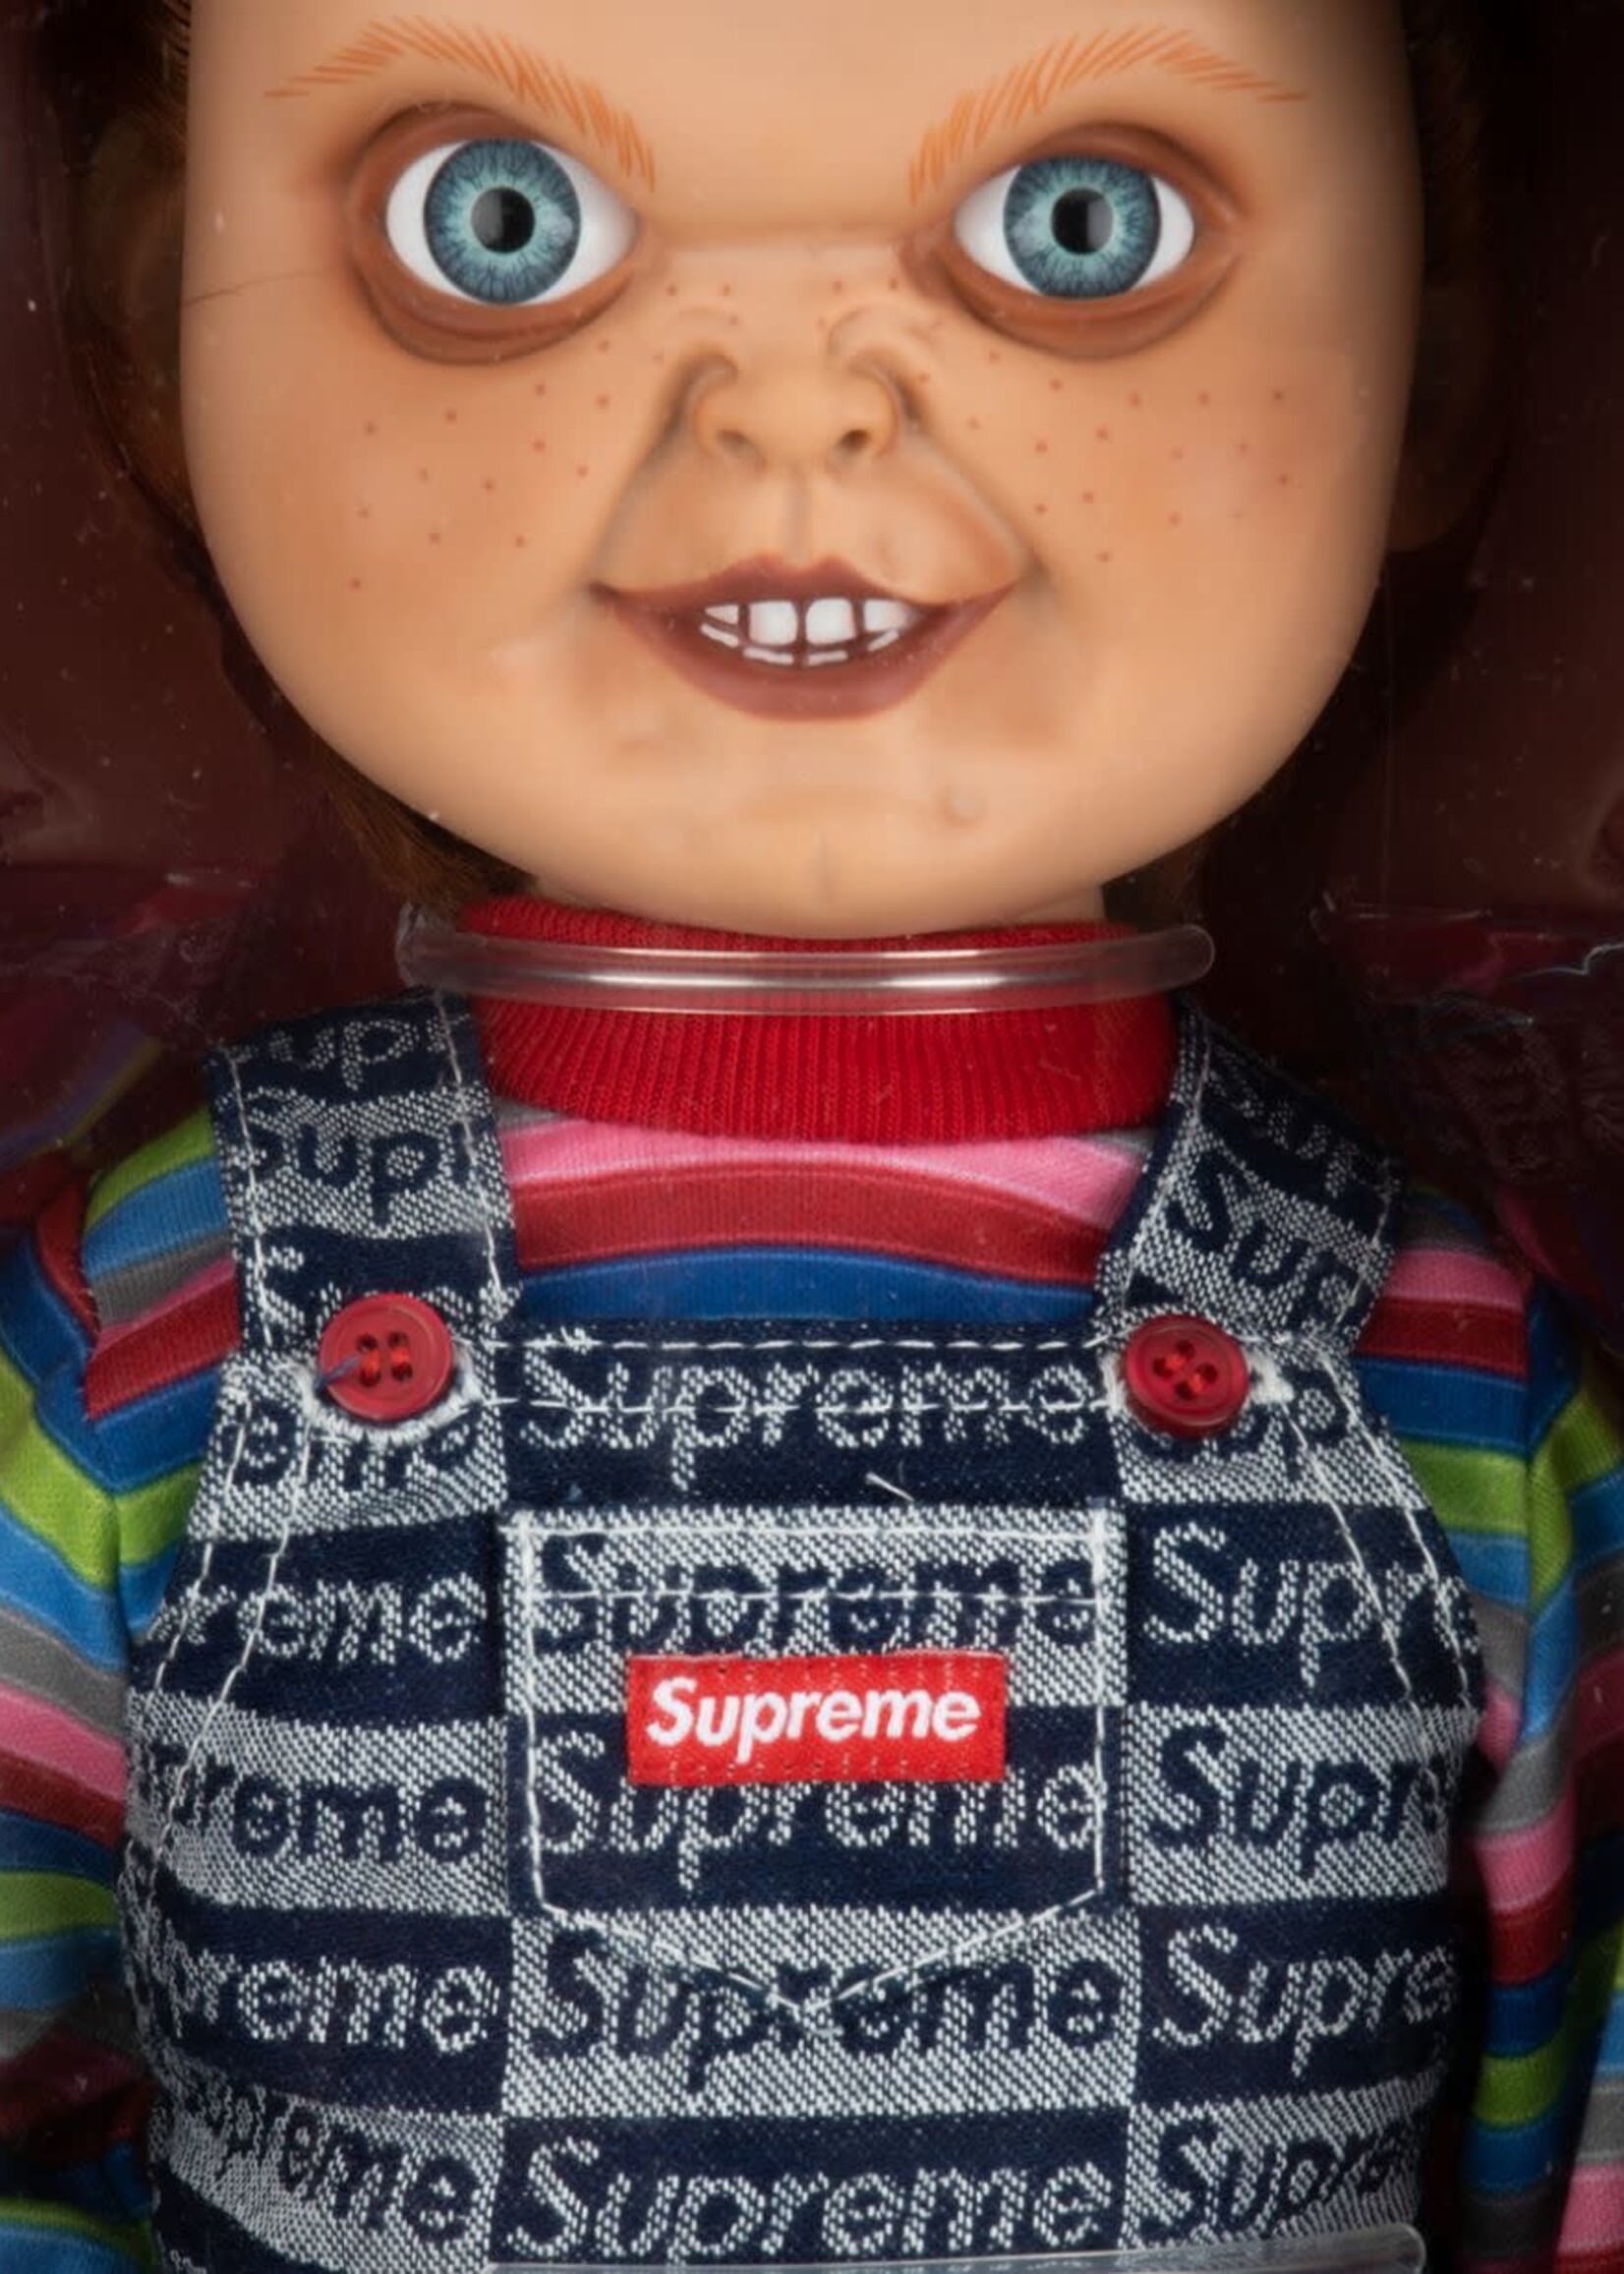 Supreme Supreme Chucky Doll Chucky